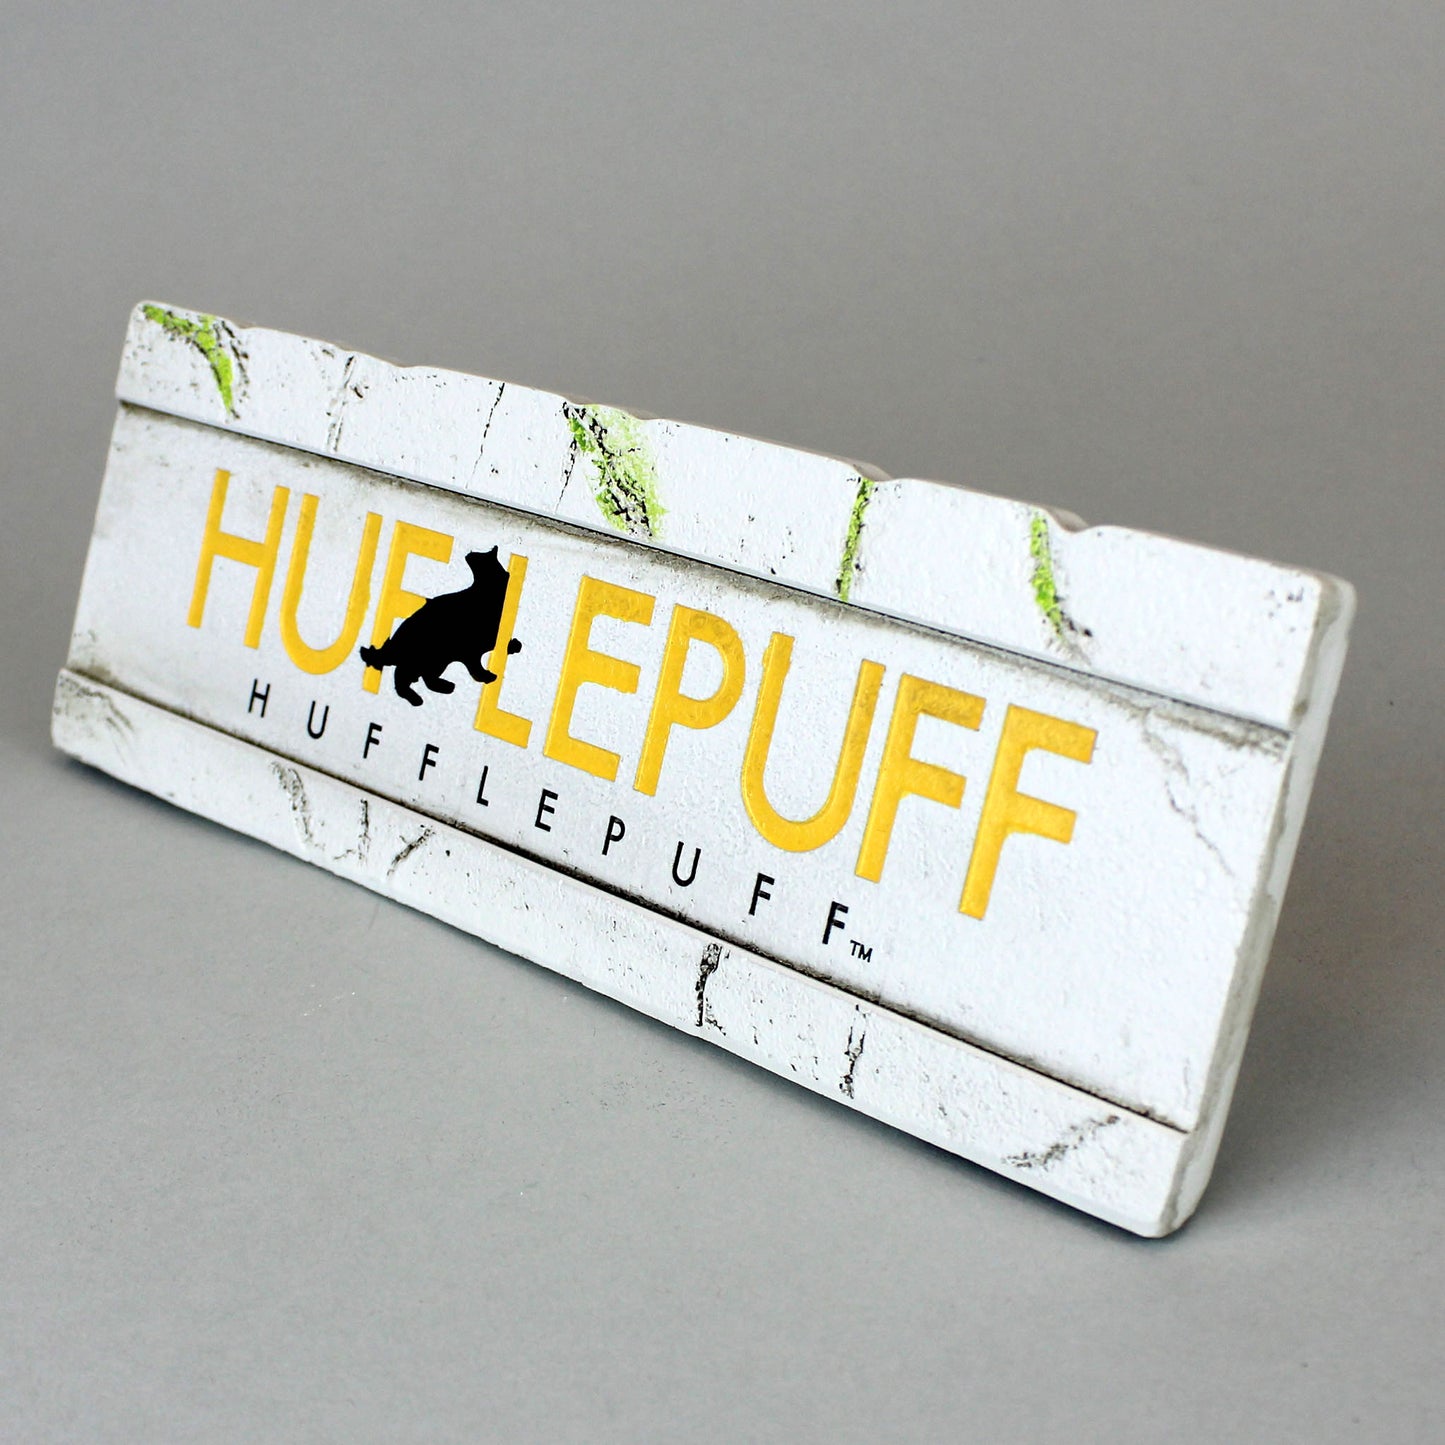 Hufflepuff Hogwarts House Harry Potter Stone Resin Desk Sign